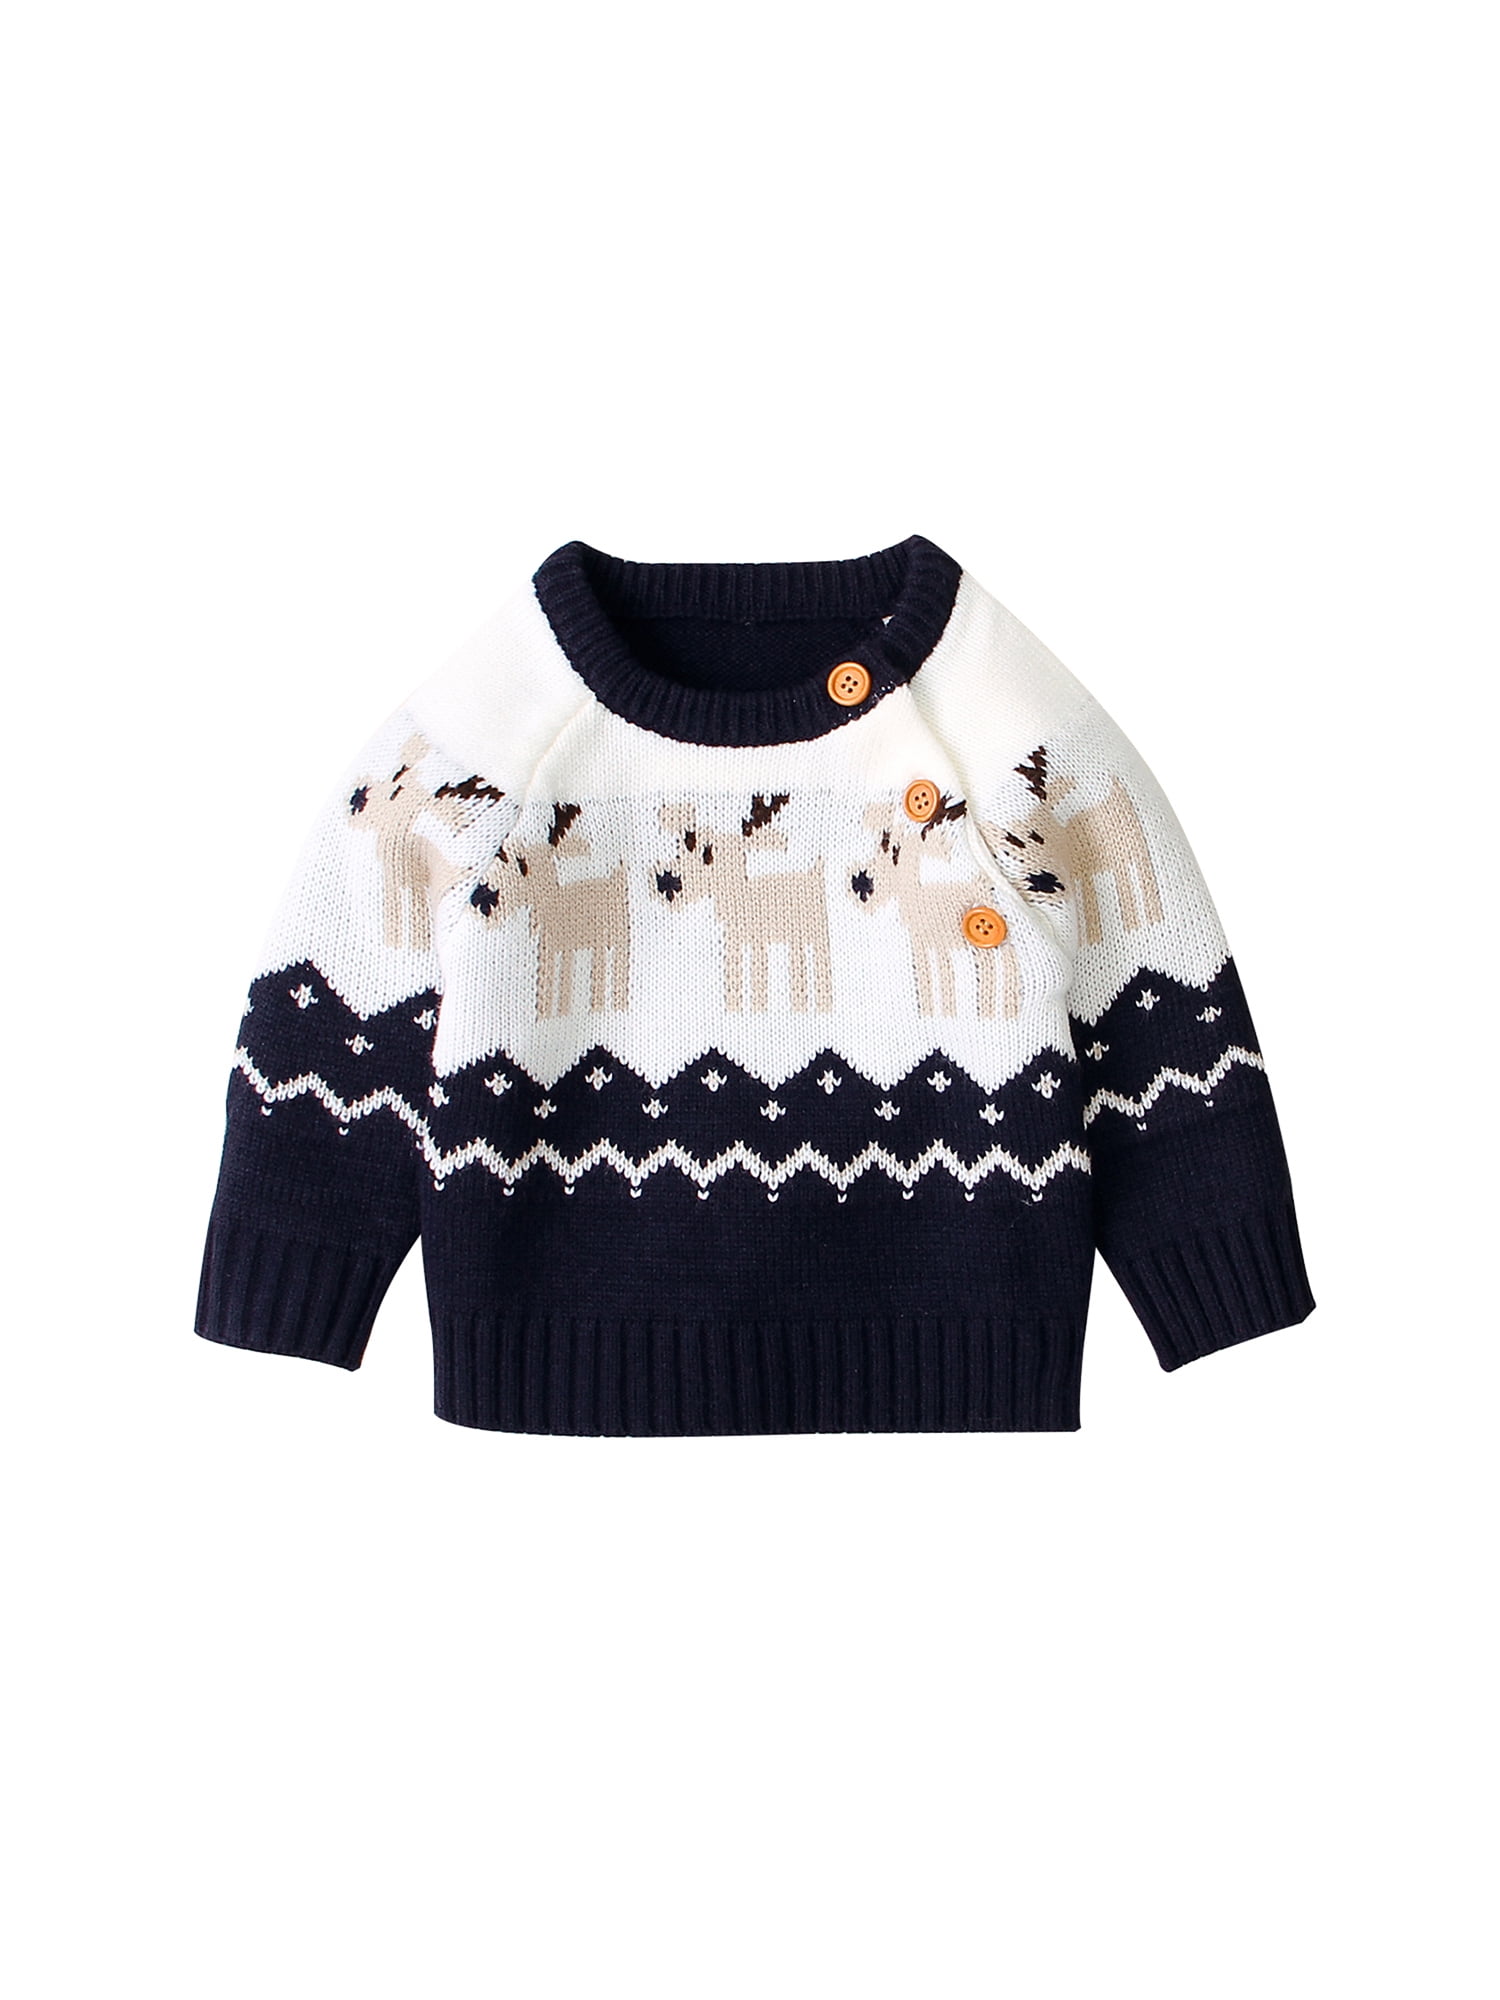 Long Sleeve Sweater for kids baby girls boy winter warm Christmas Jumper Sweater 